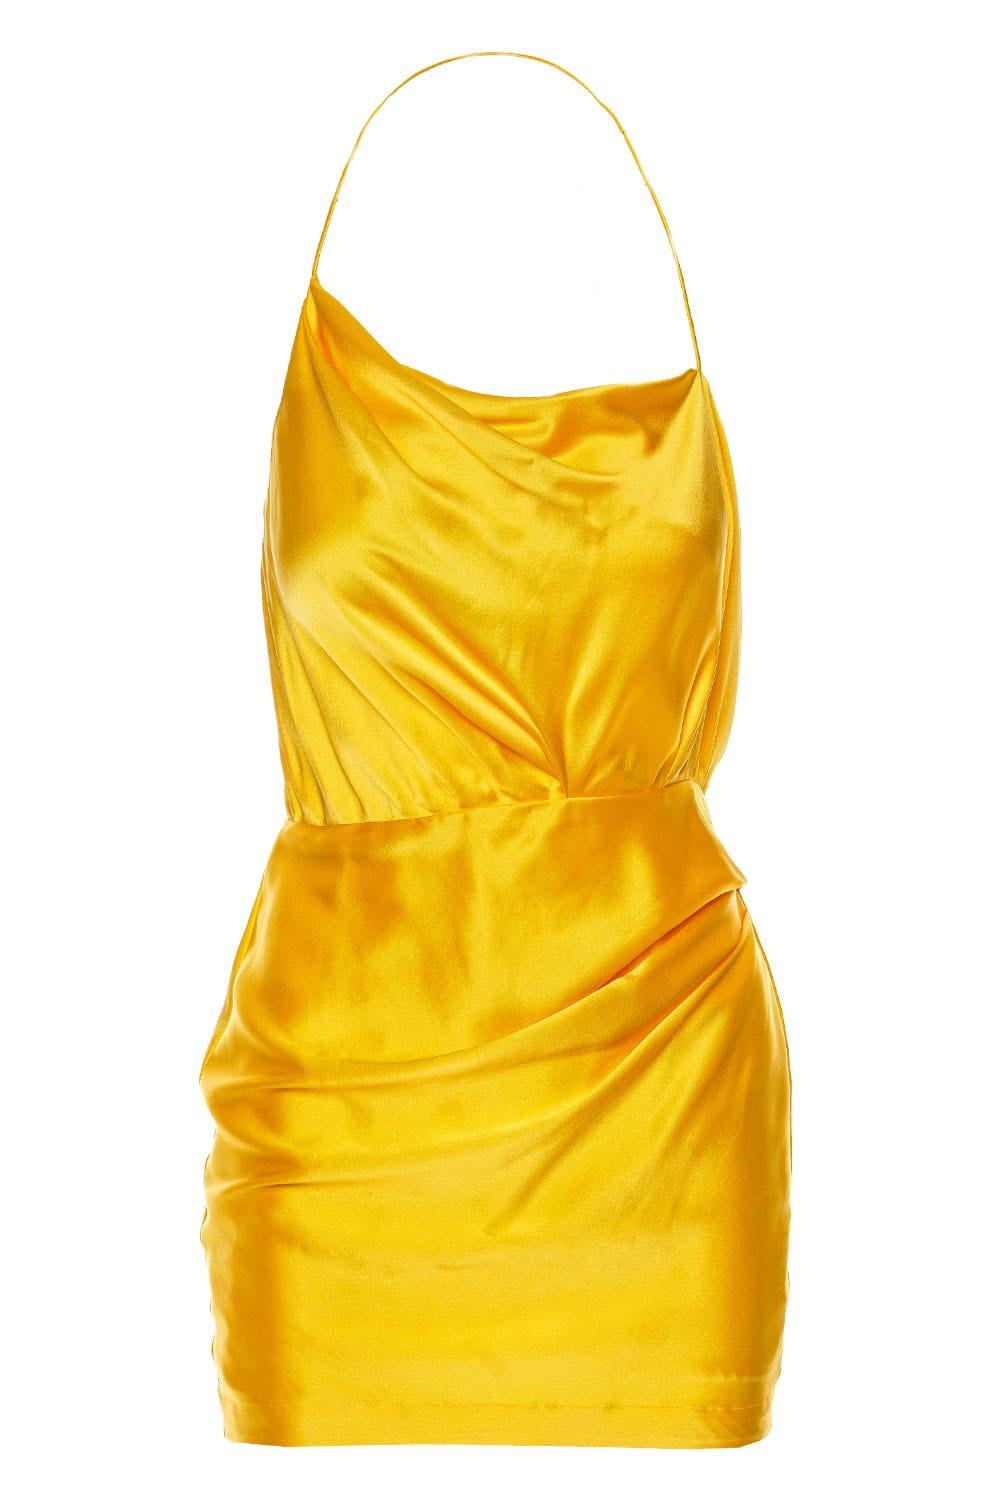 SALE: Yellow Satin Halter Frill Dress, SilkFred US